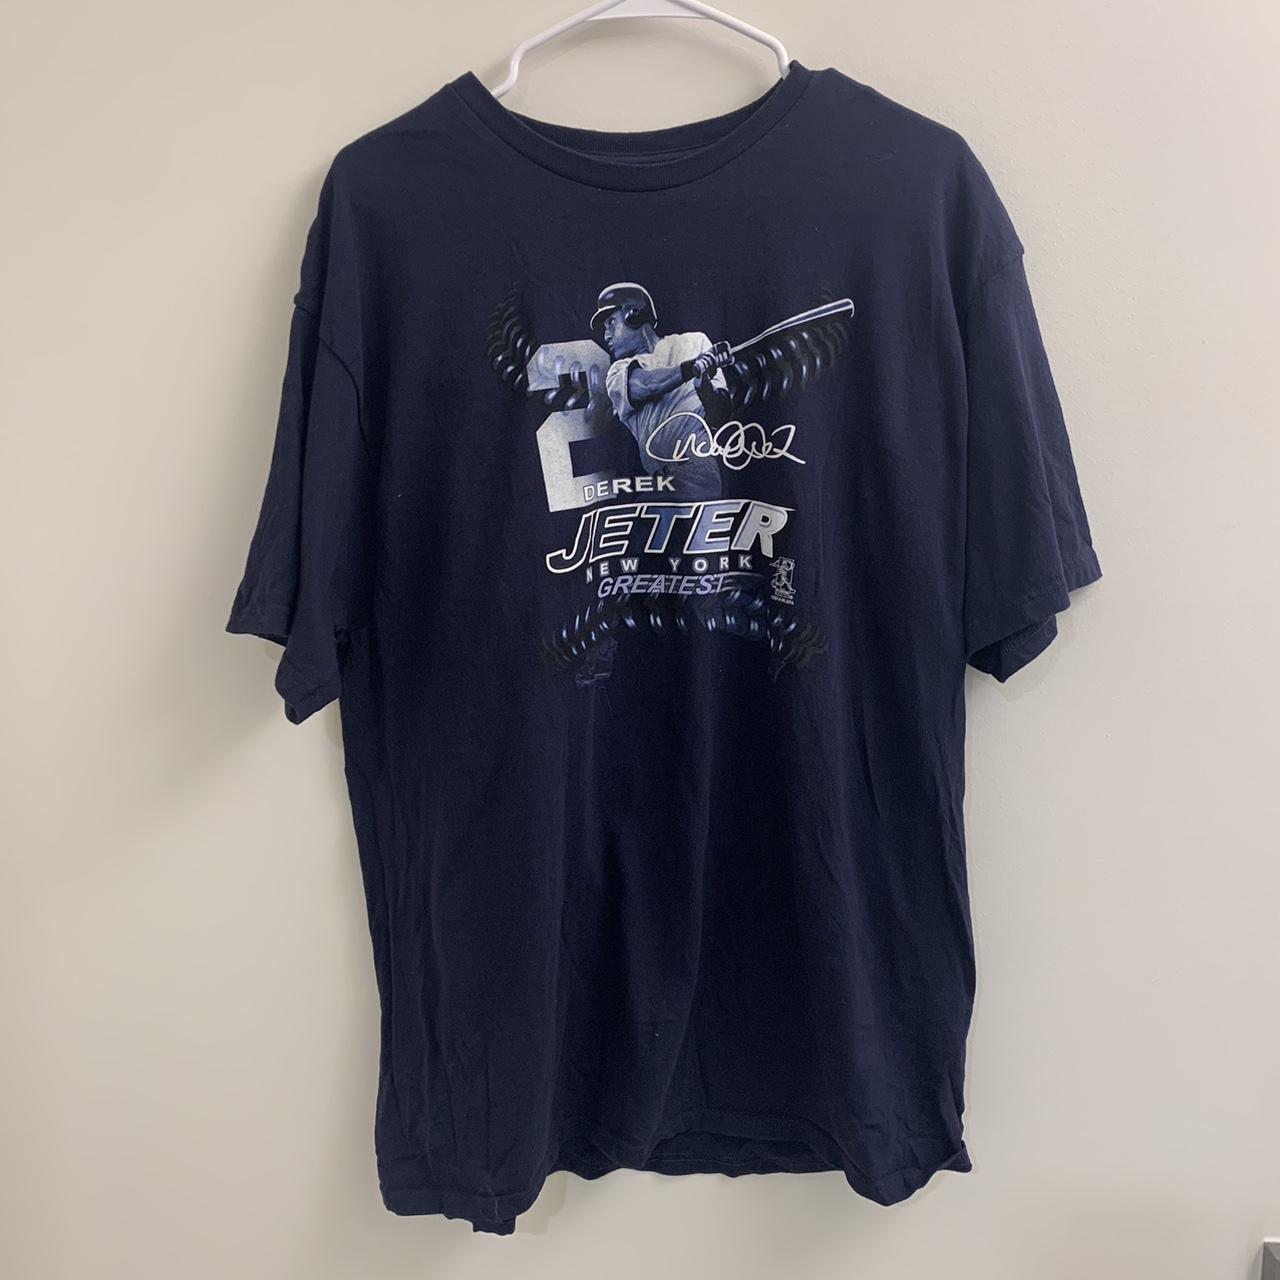 MLB Men's T-Shirt - Navy - L